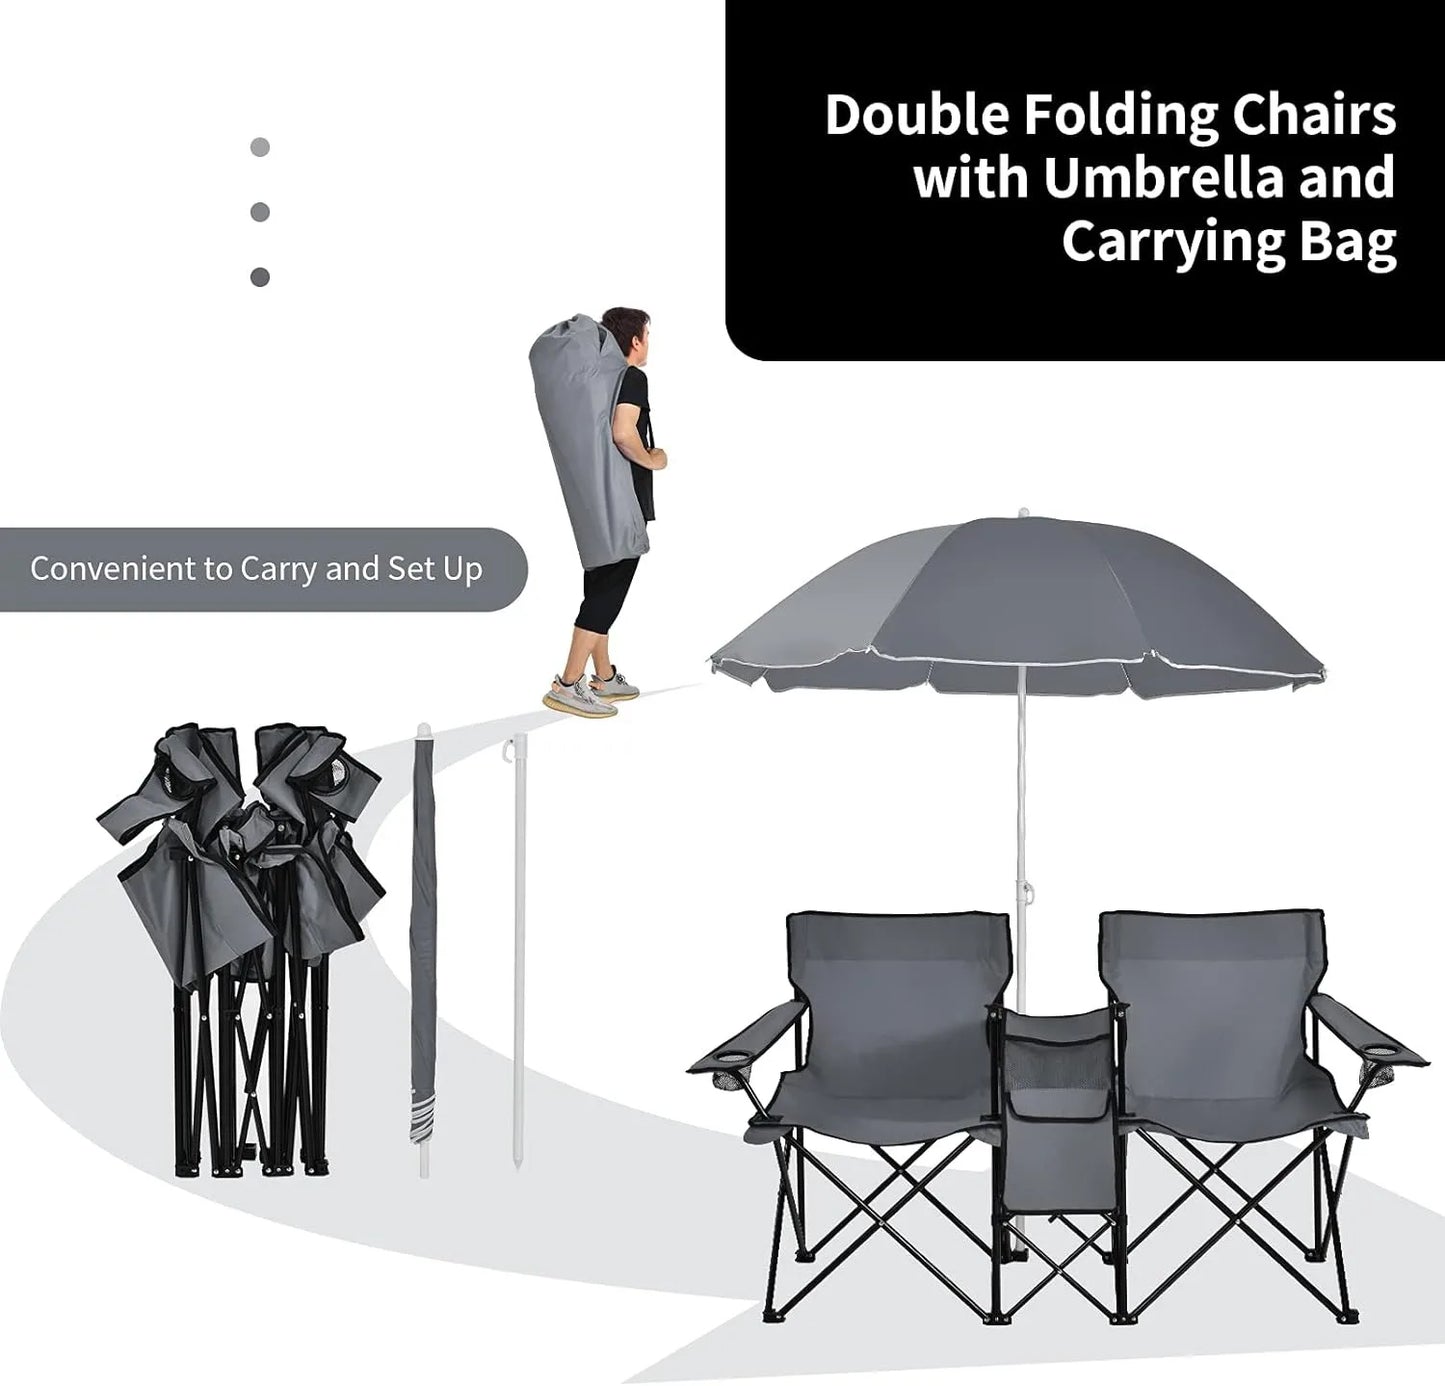 Portable Folding Picnic Double Chair W/Umbrella Table Cooler Beach Camping Chair